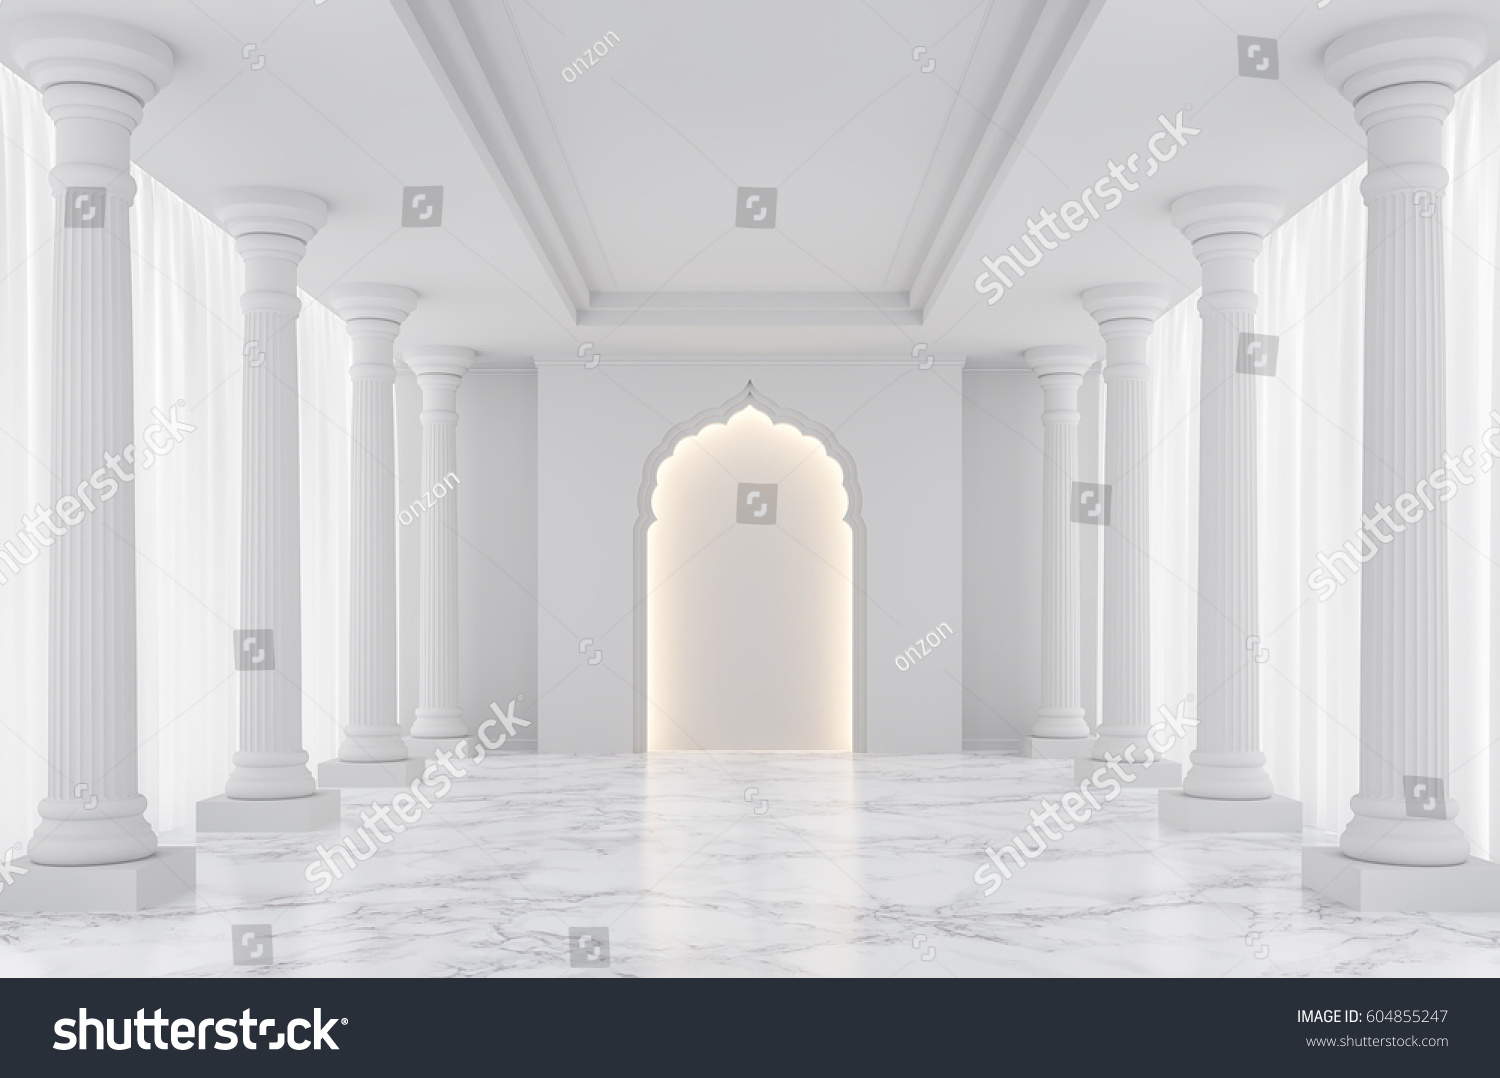 Page columns. Зал с колоннами. Белый зал с колоннами. Белые колонны. Помещение с колоннами.